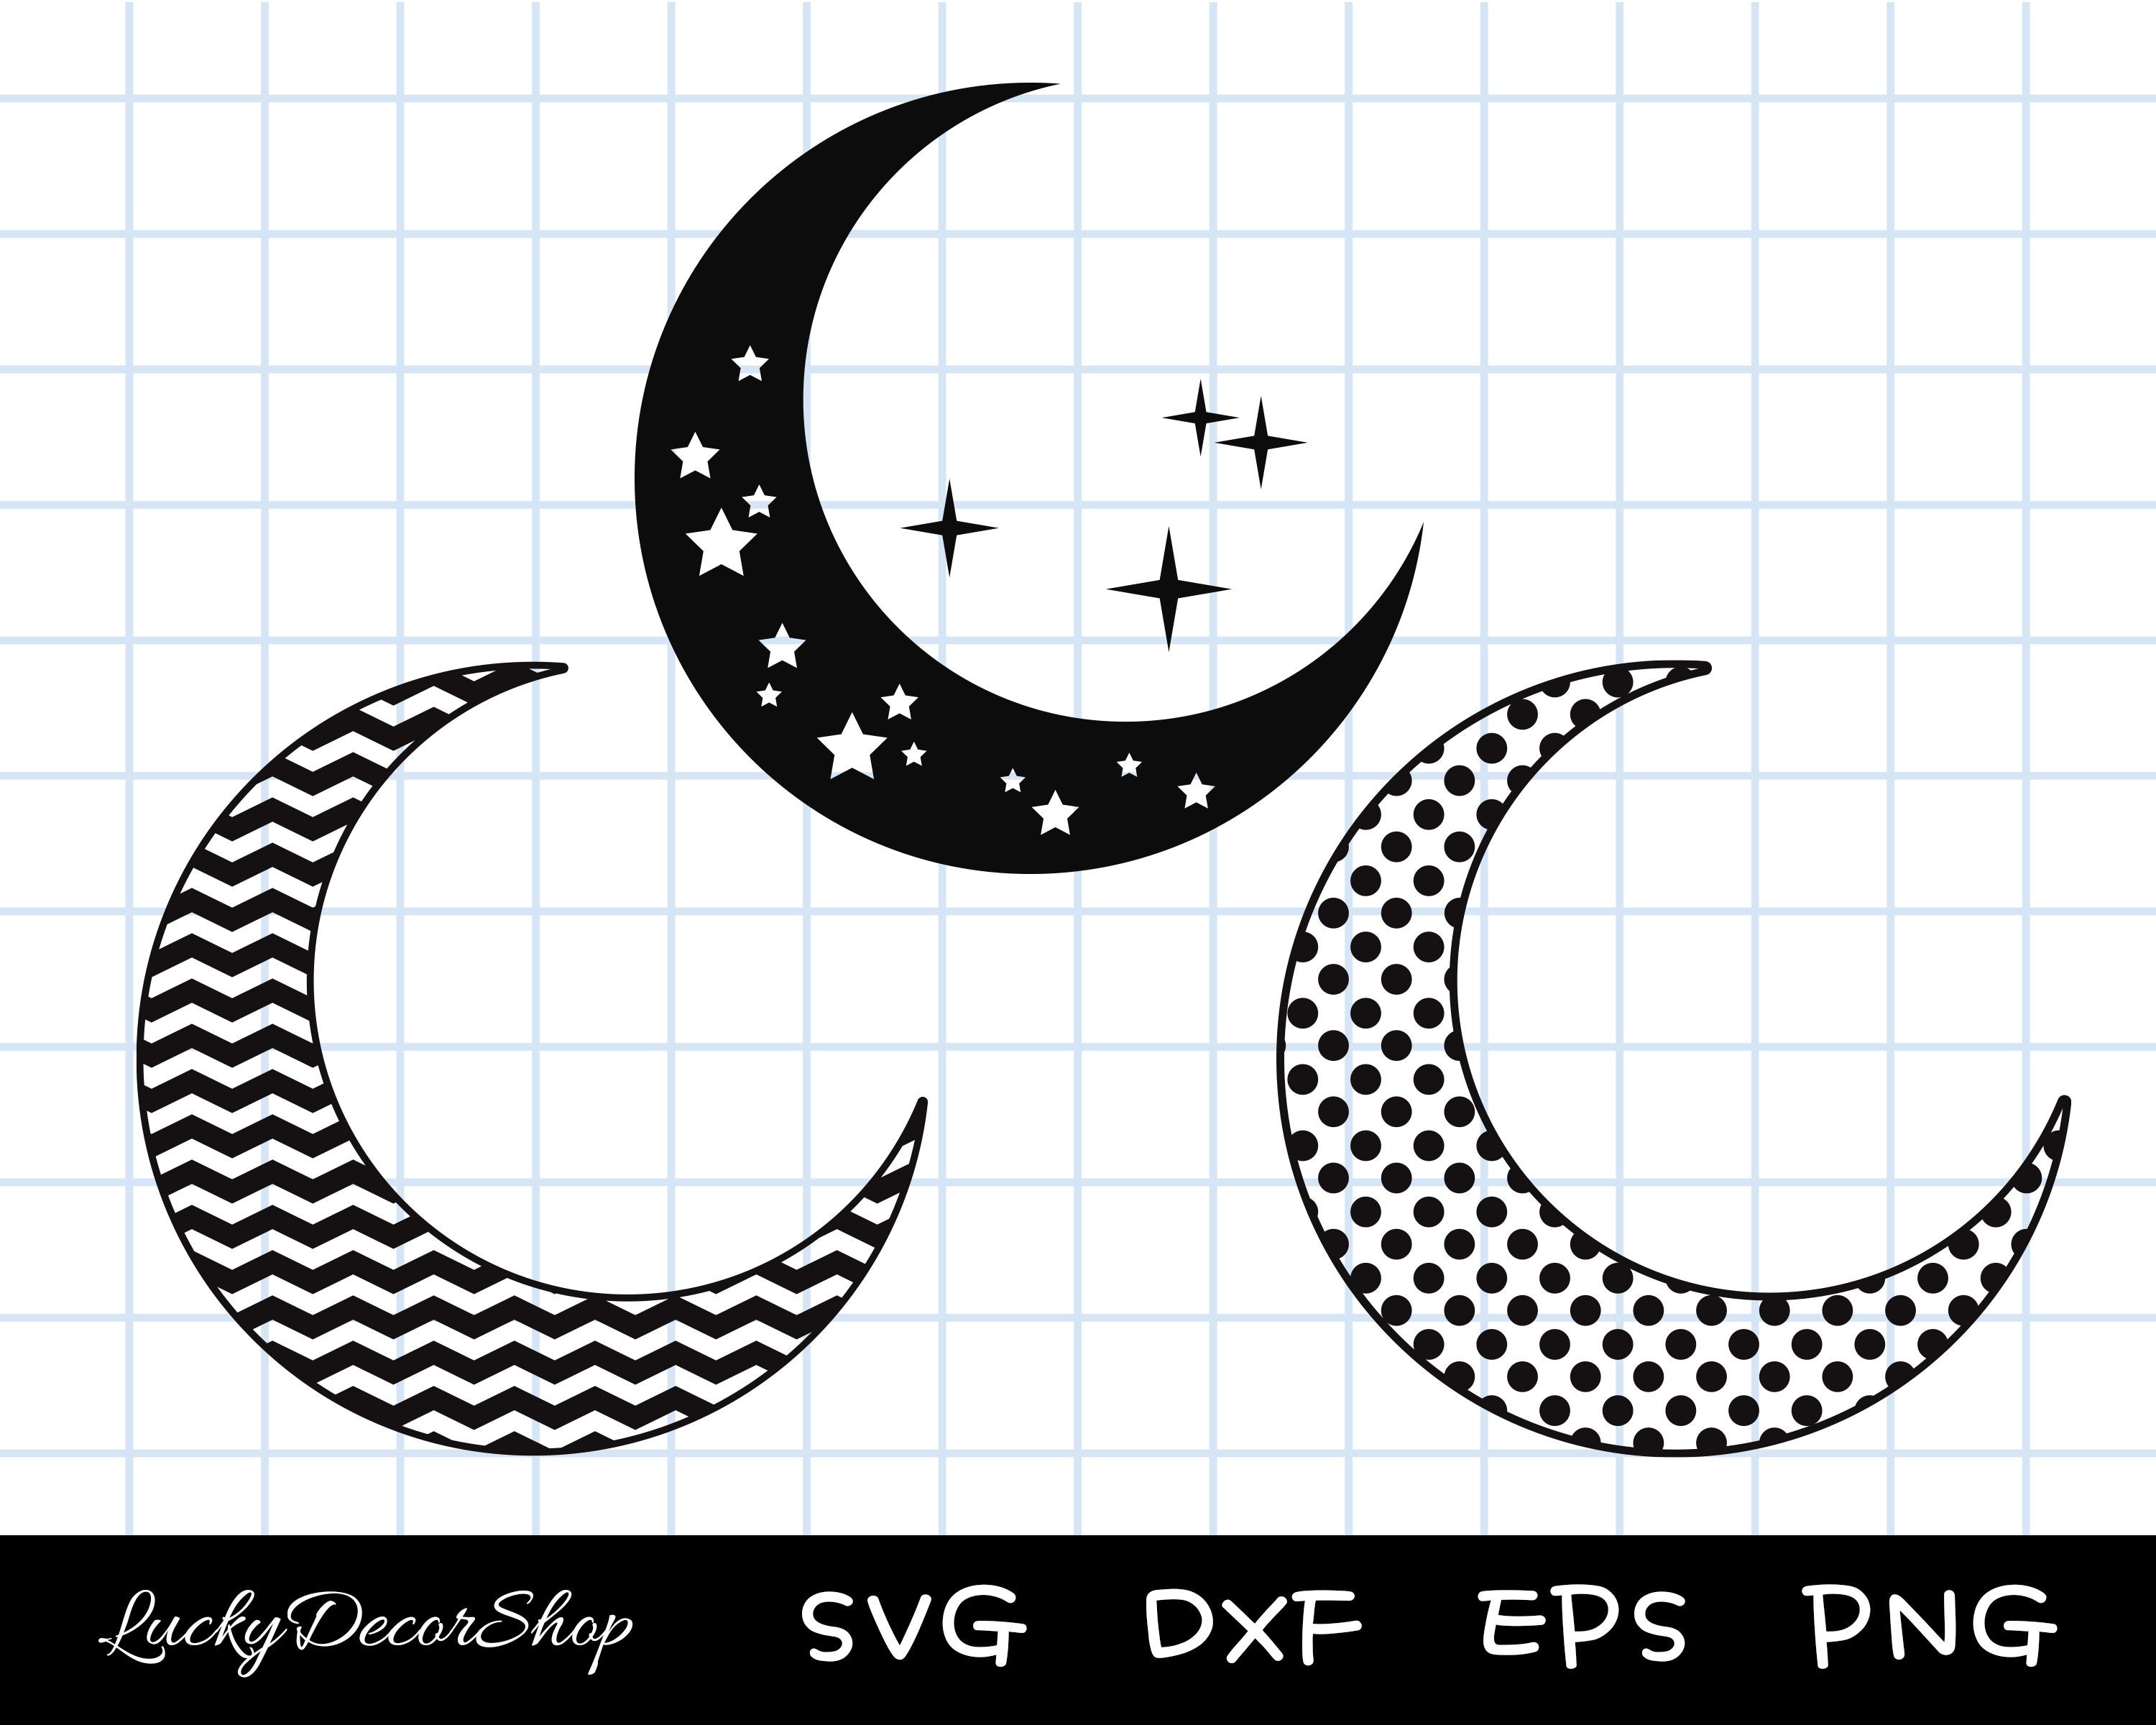 Free Halloween Moon Vector - Download in Illustrator, EPS, SVG